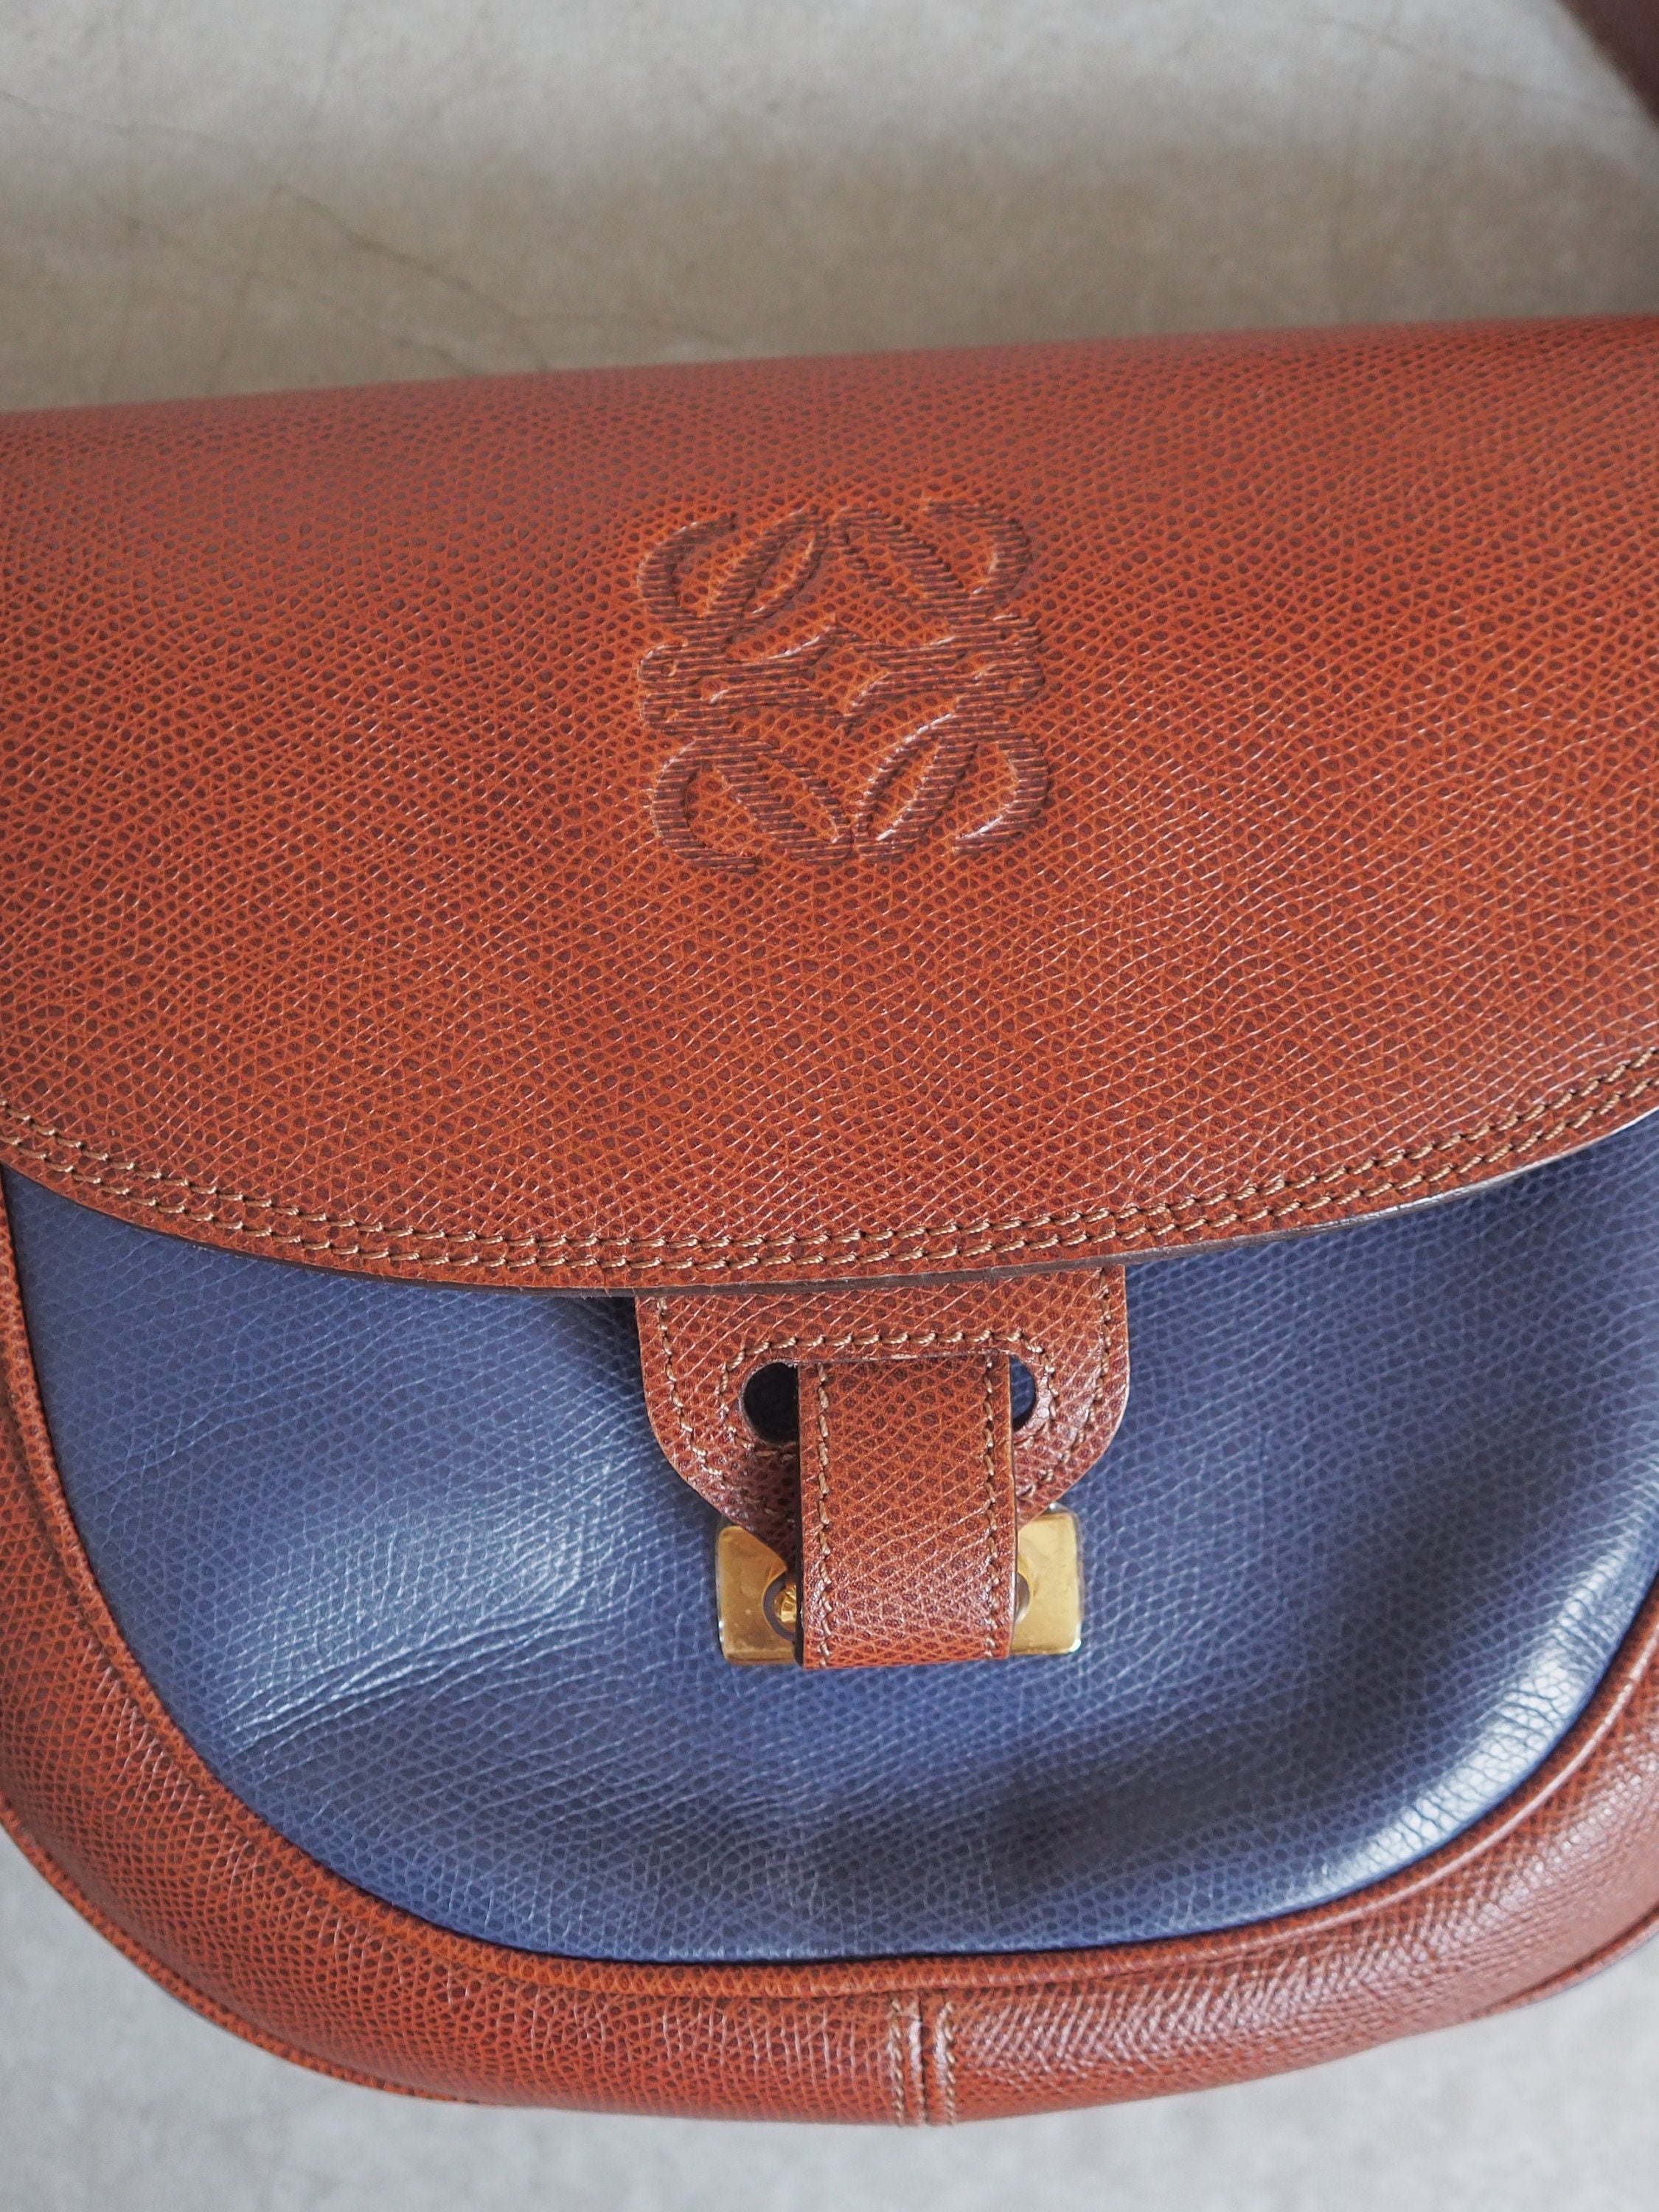 LOEWE Anagram Shoulder Bag Brown Blue Leather Vintage Authentic